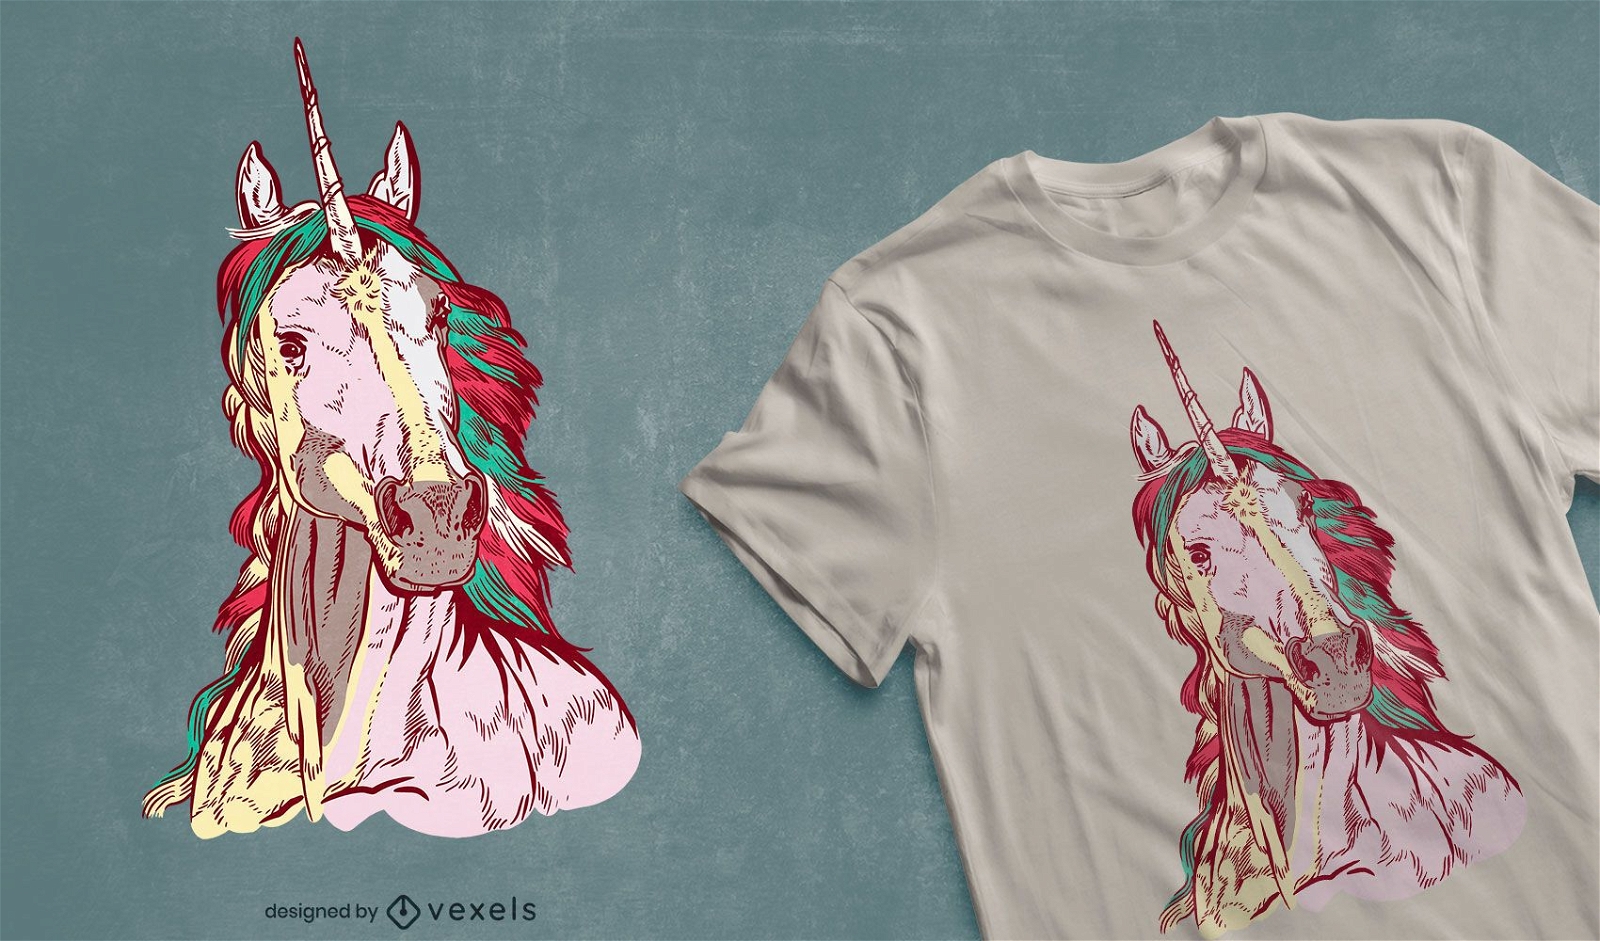 Realistic unicorn hand-drawn t-shirt design